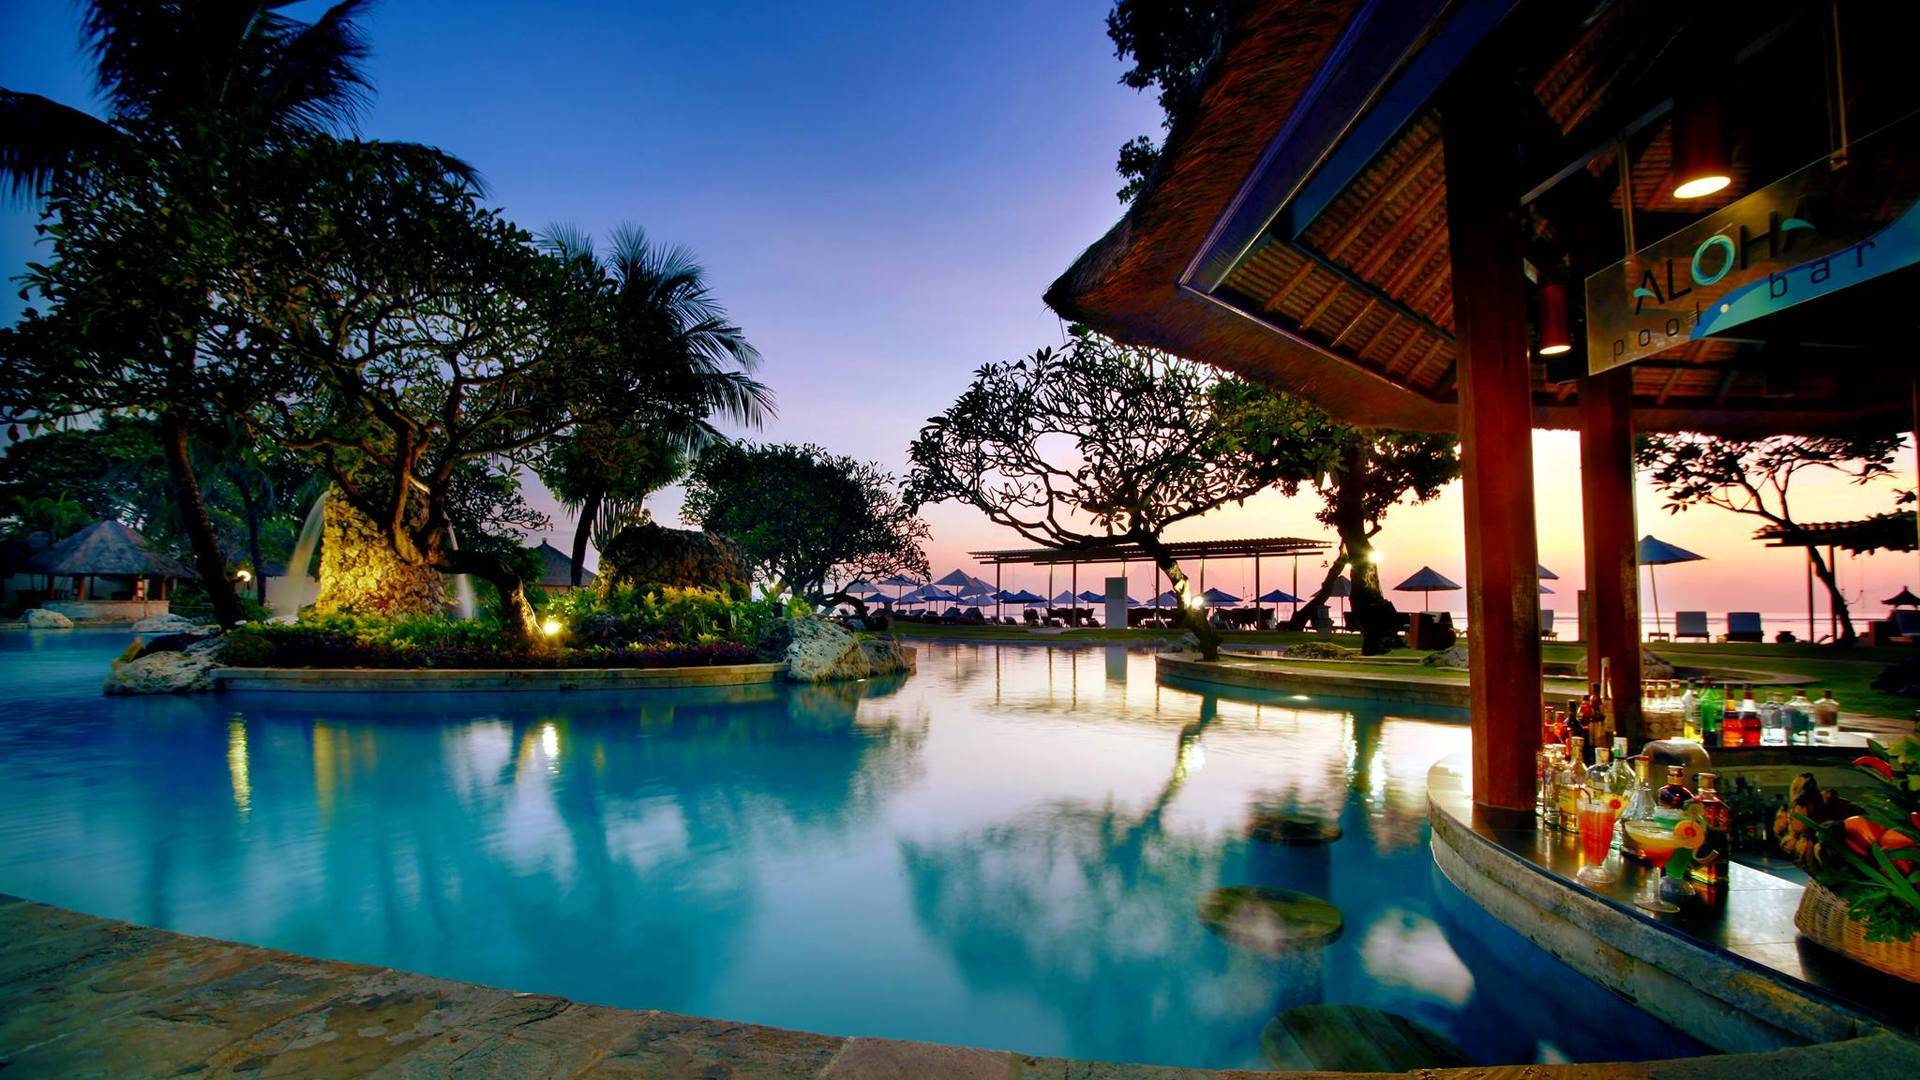 Aston kuta hotel - residence 4* - индонезия, бали - отели | пегас туристик